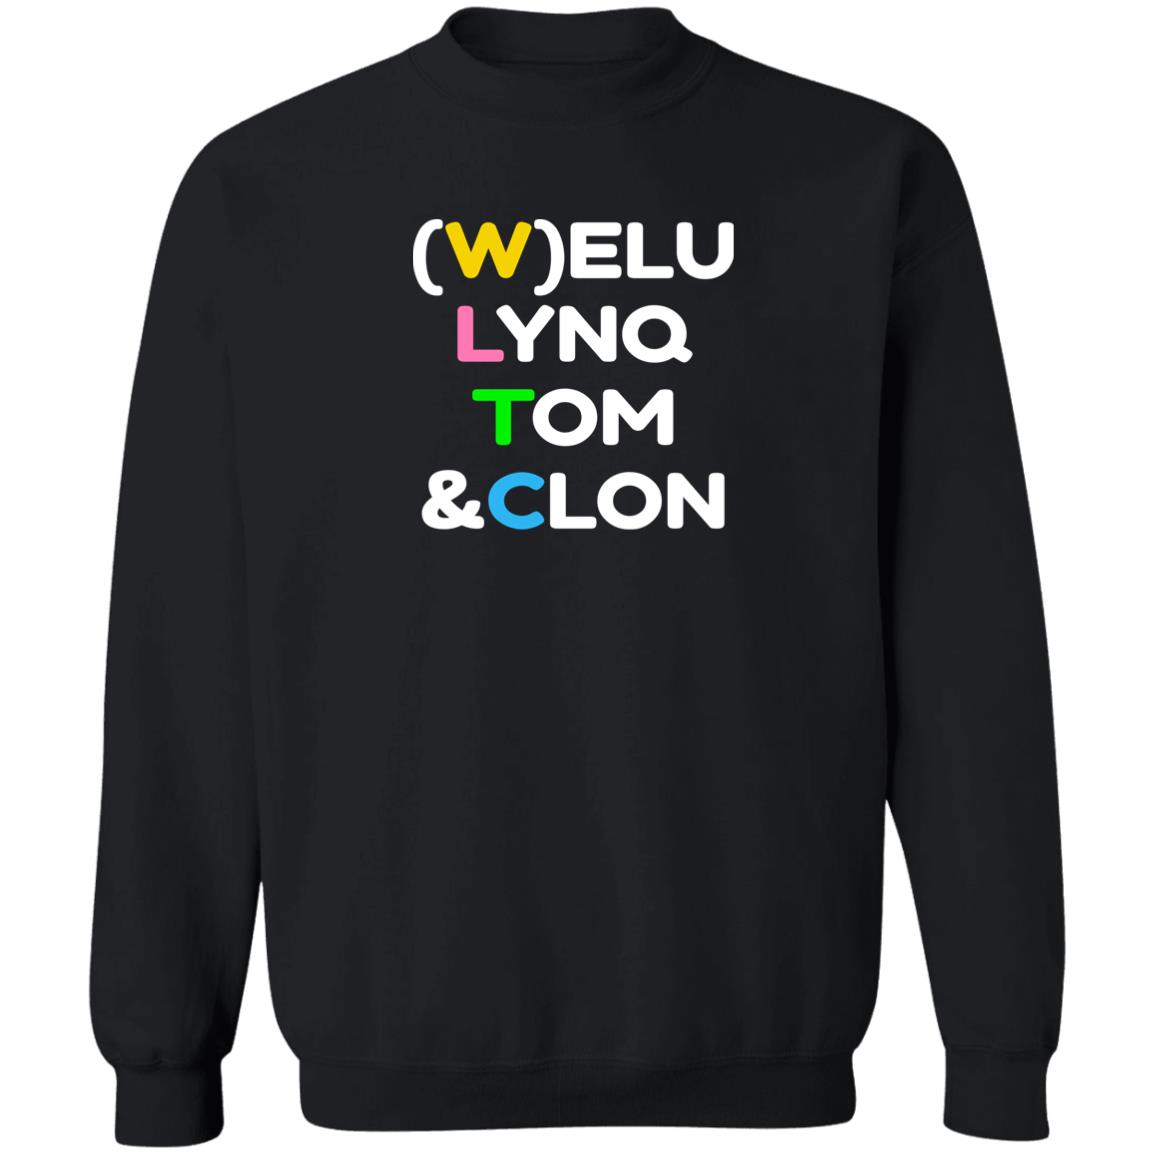 Wltc Welu Lynq Tom Clon Shirt 1